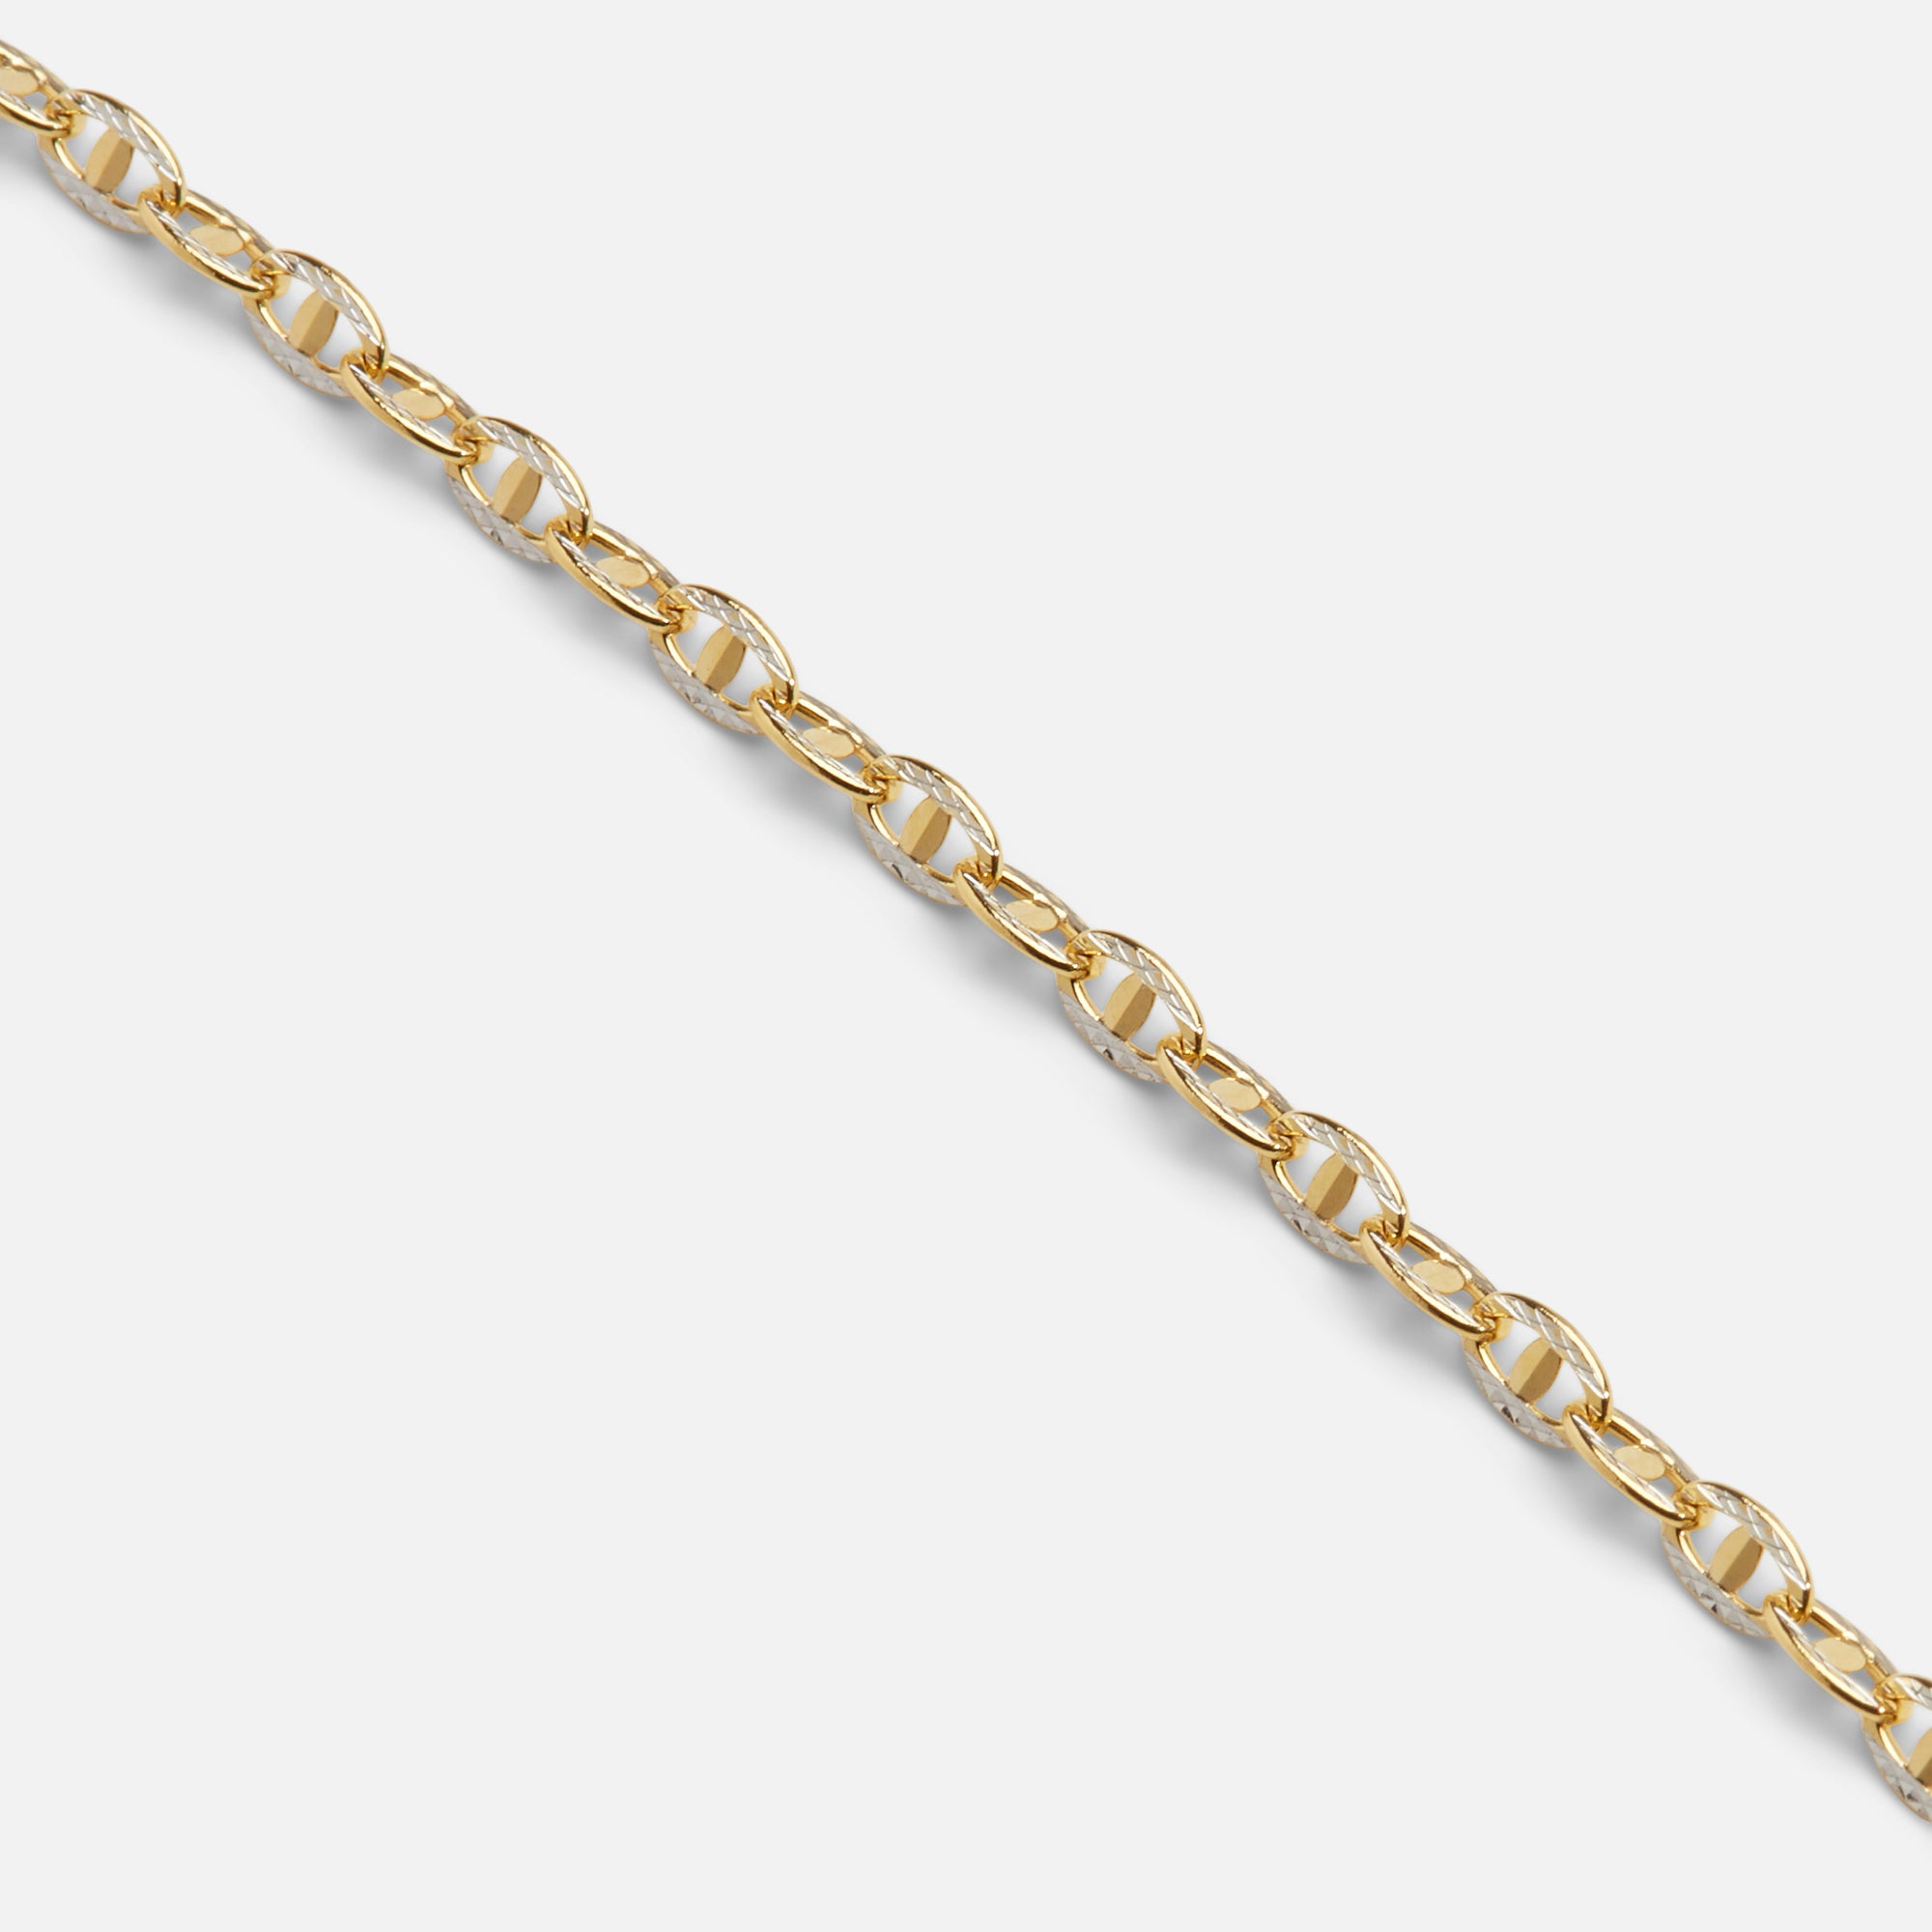 10K yellow gold navy mesh bracelet